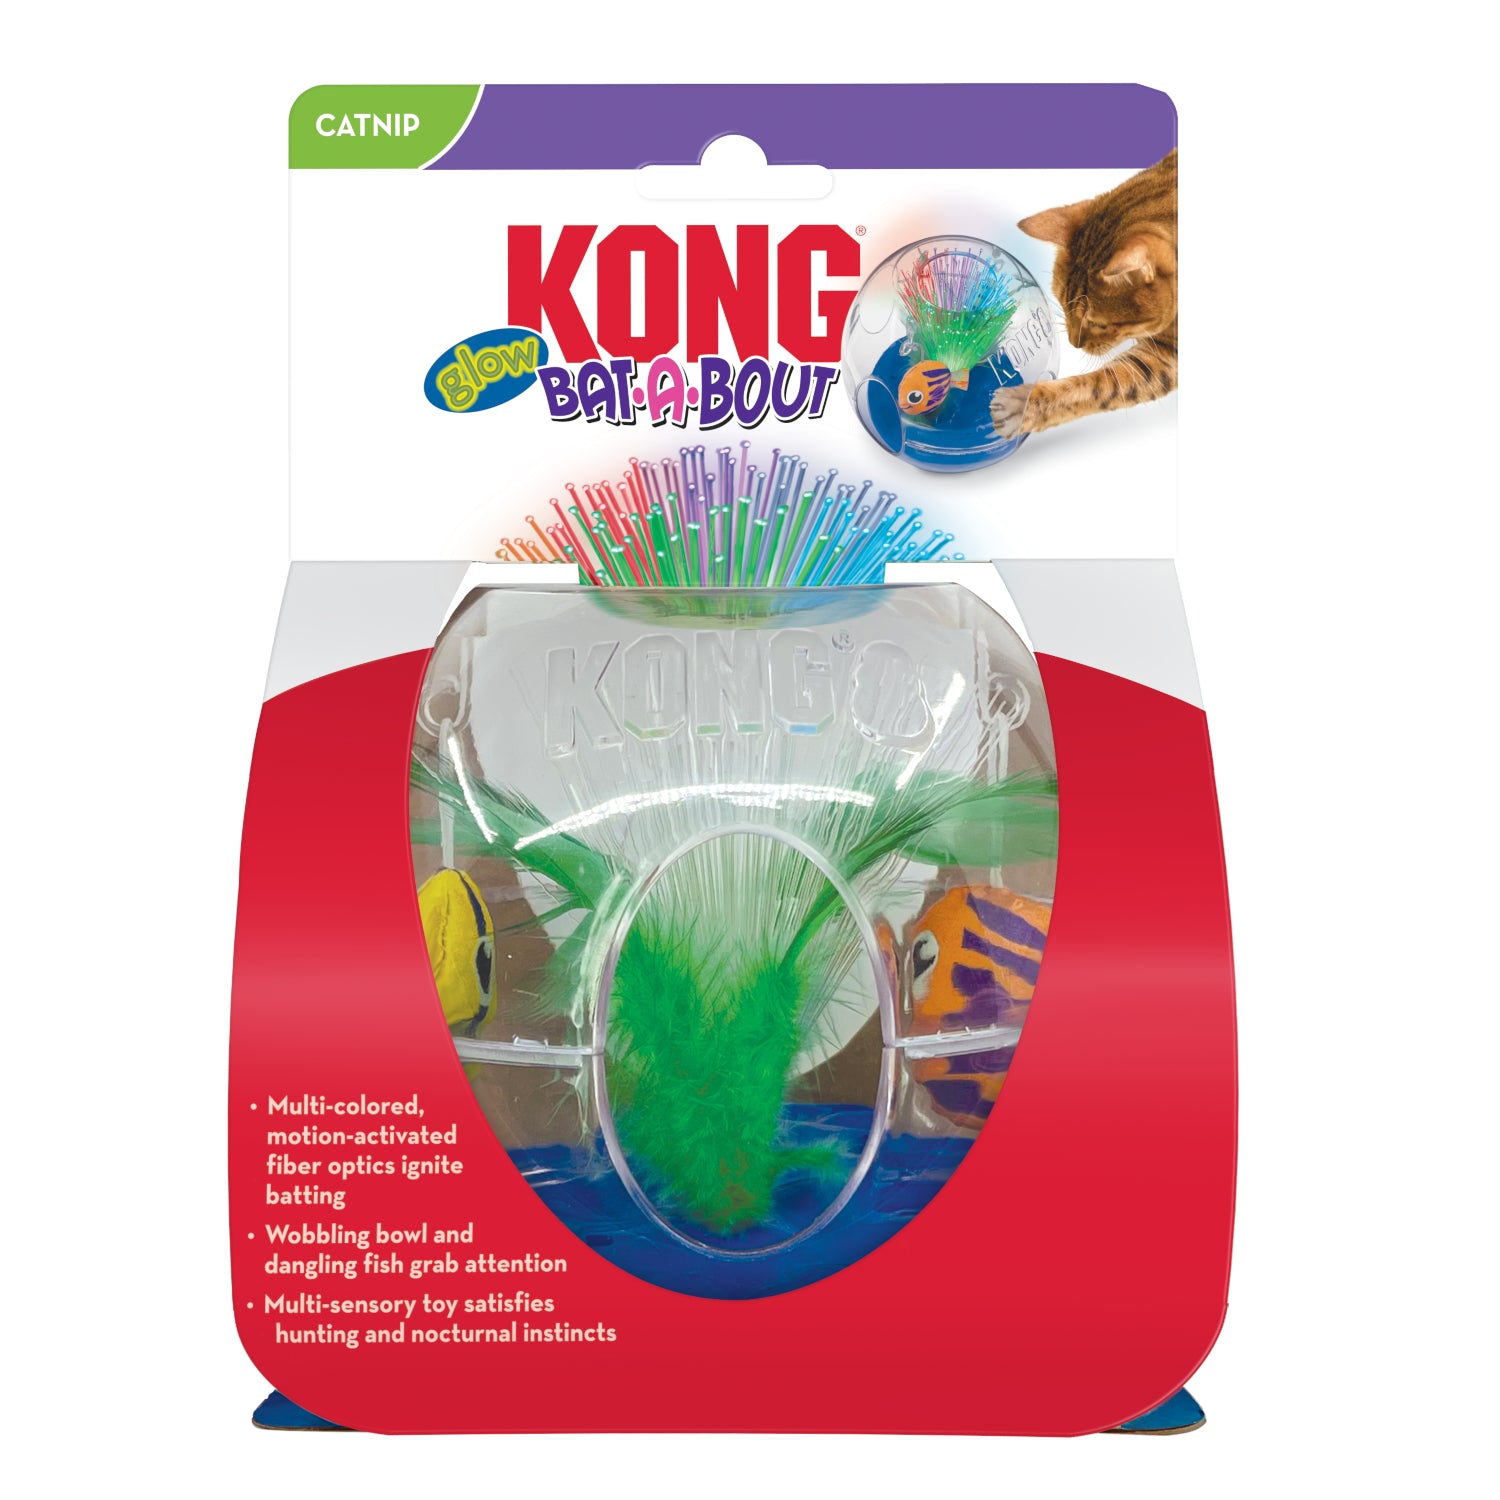 KONG Bat-A-Bout Glow Aquarium Catnip Toy